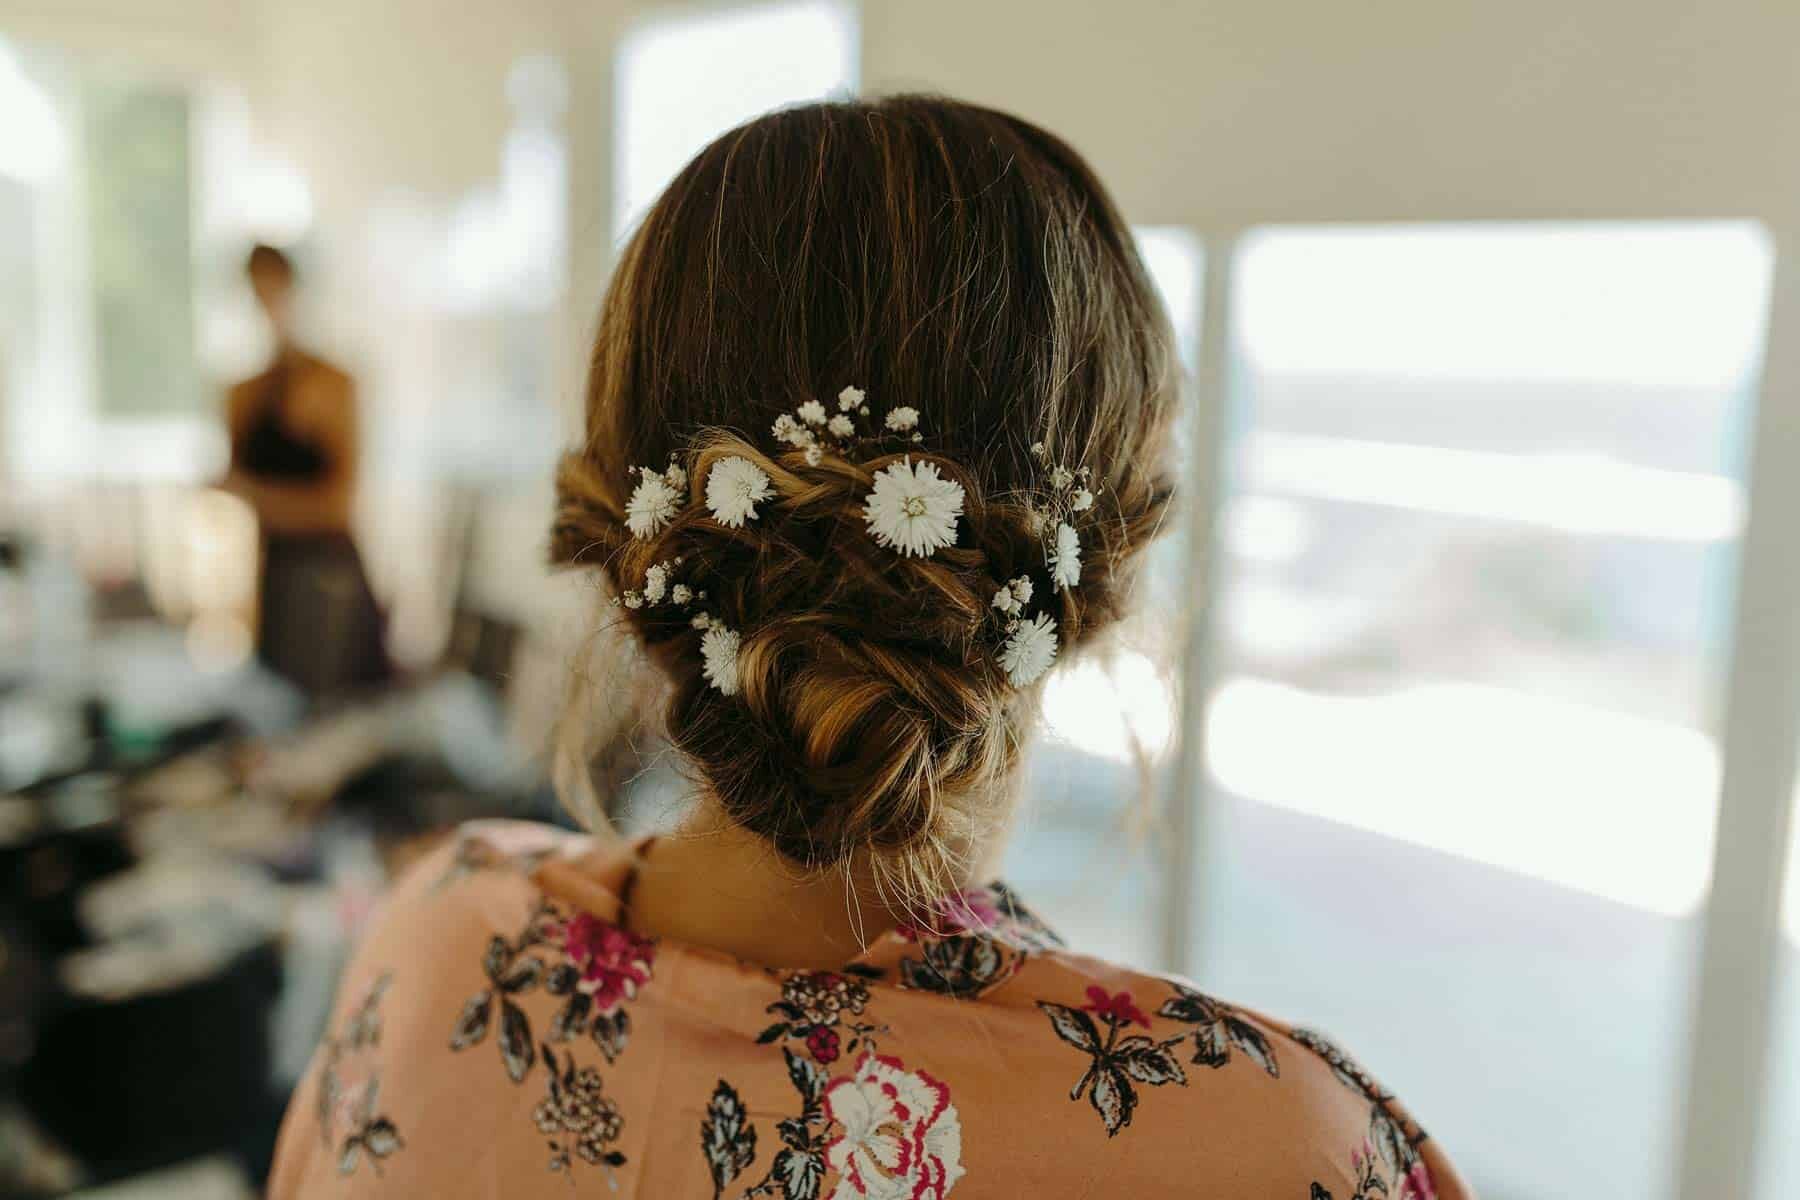 Modern upstyle wedding hair in bun with flowers